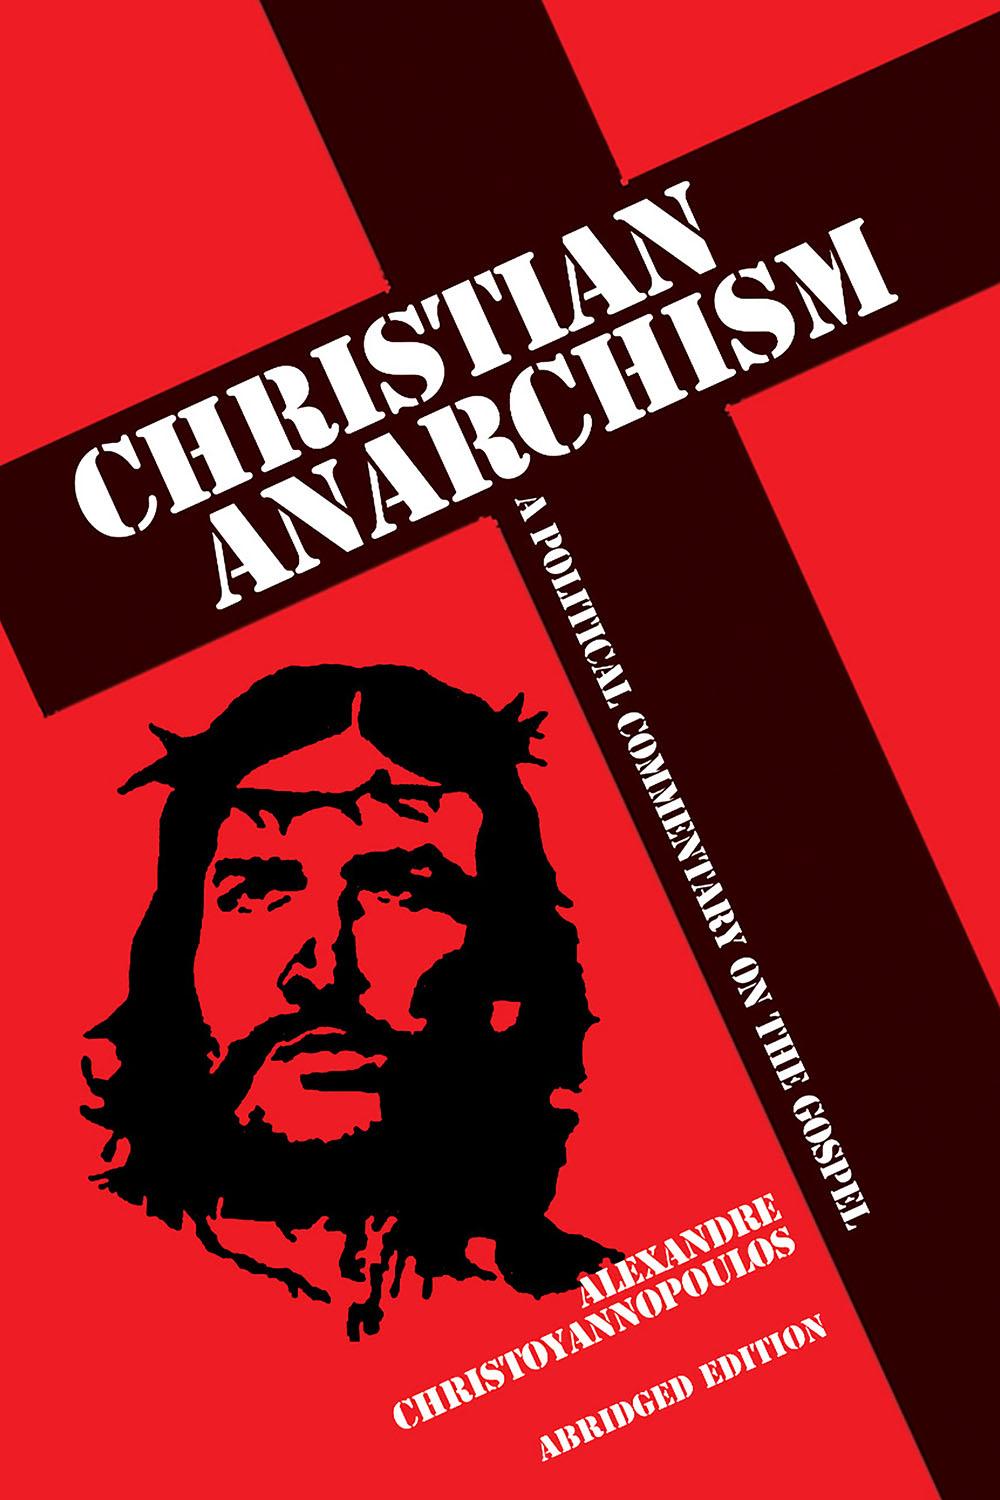 a-c-alexandre-christoyannopoulos-christian-anarchi-1.jpg